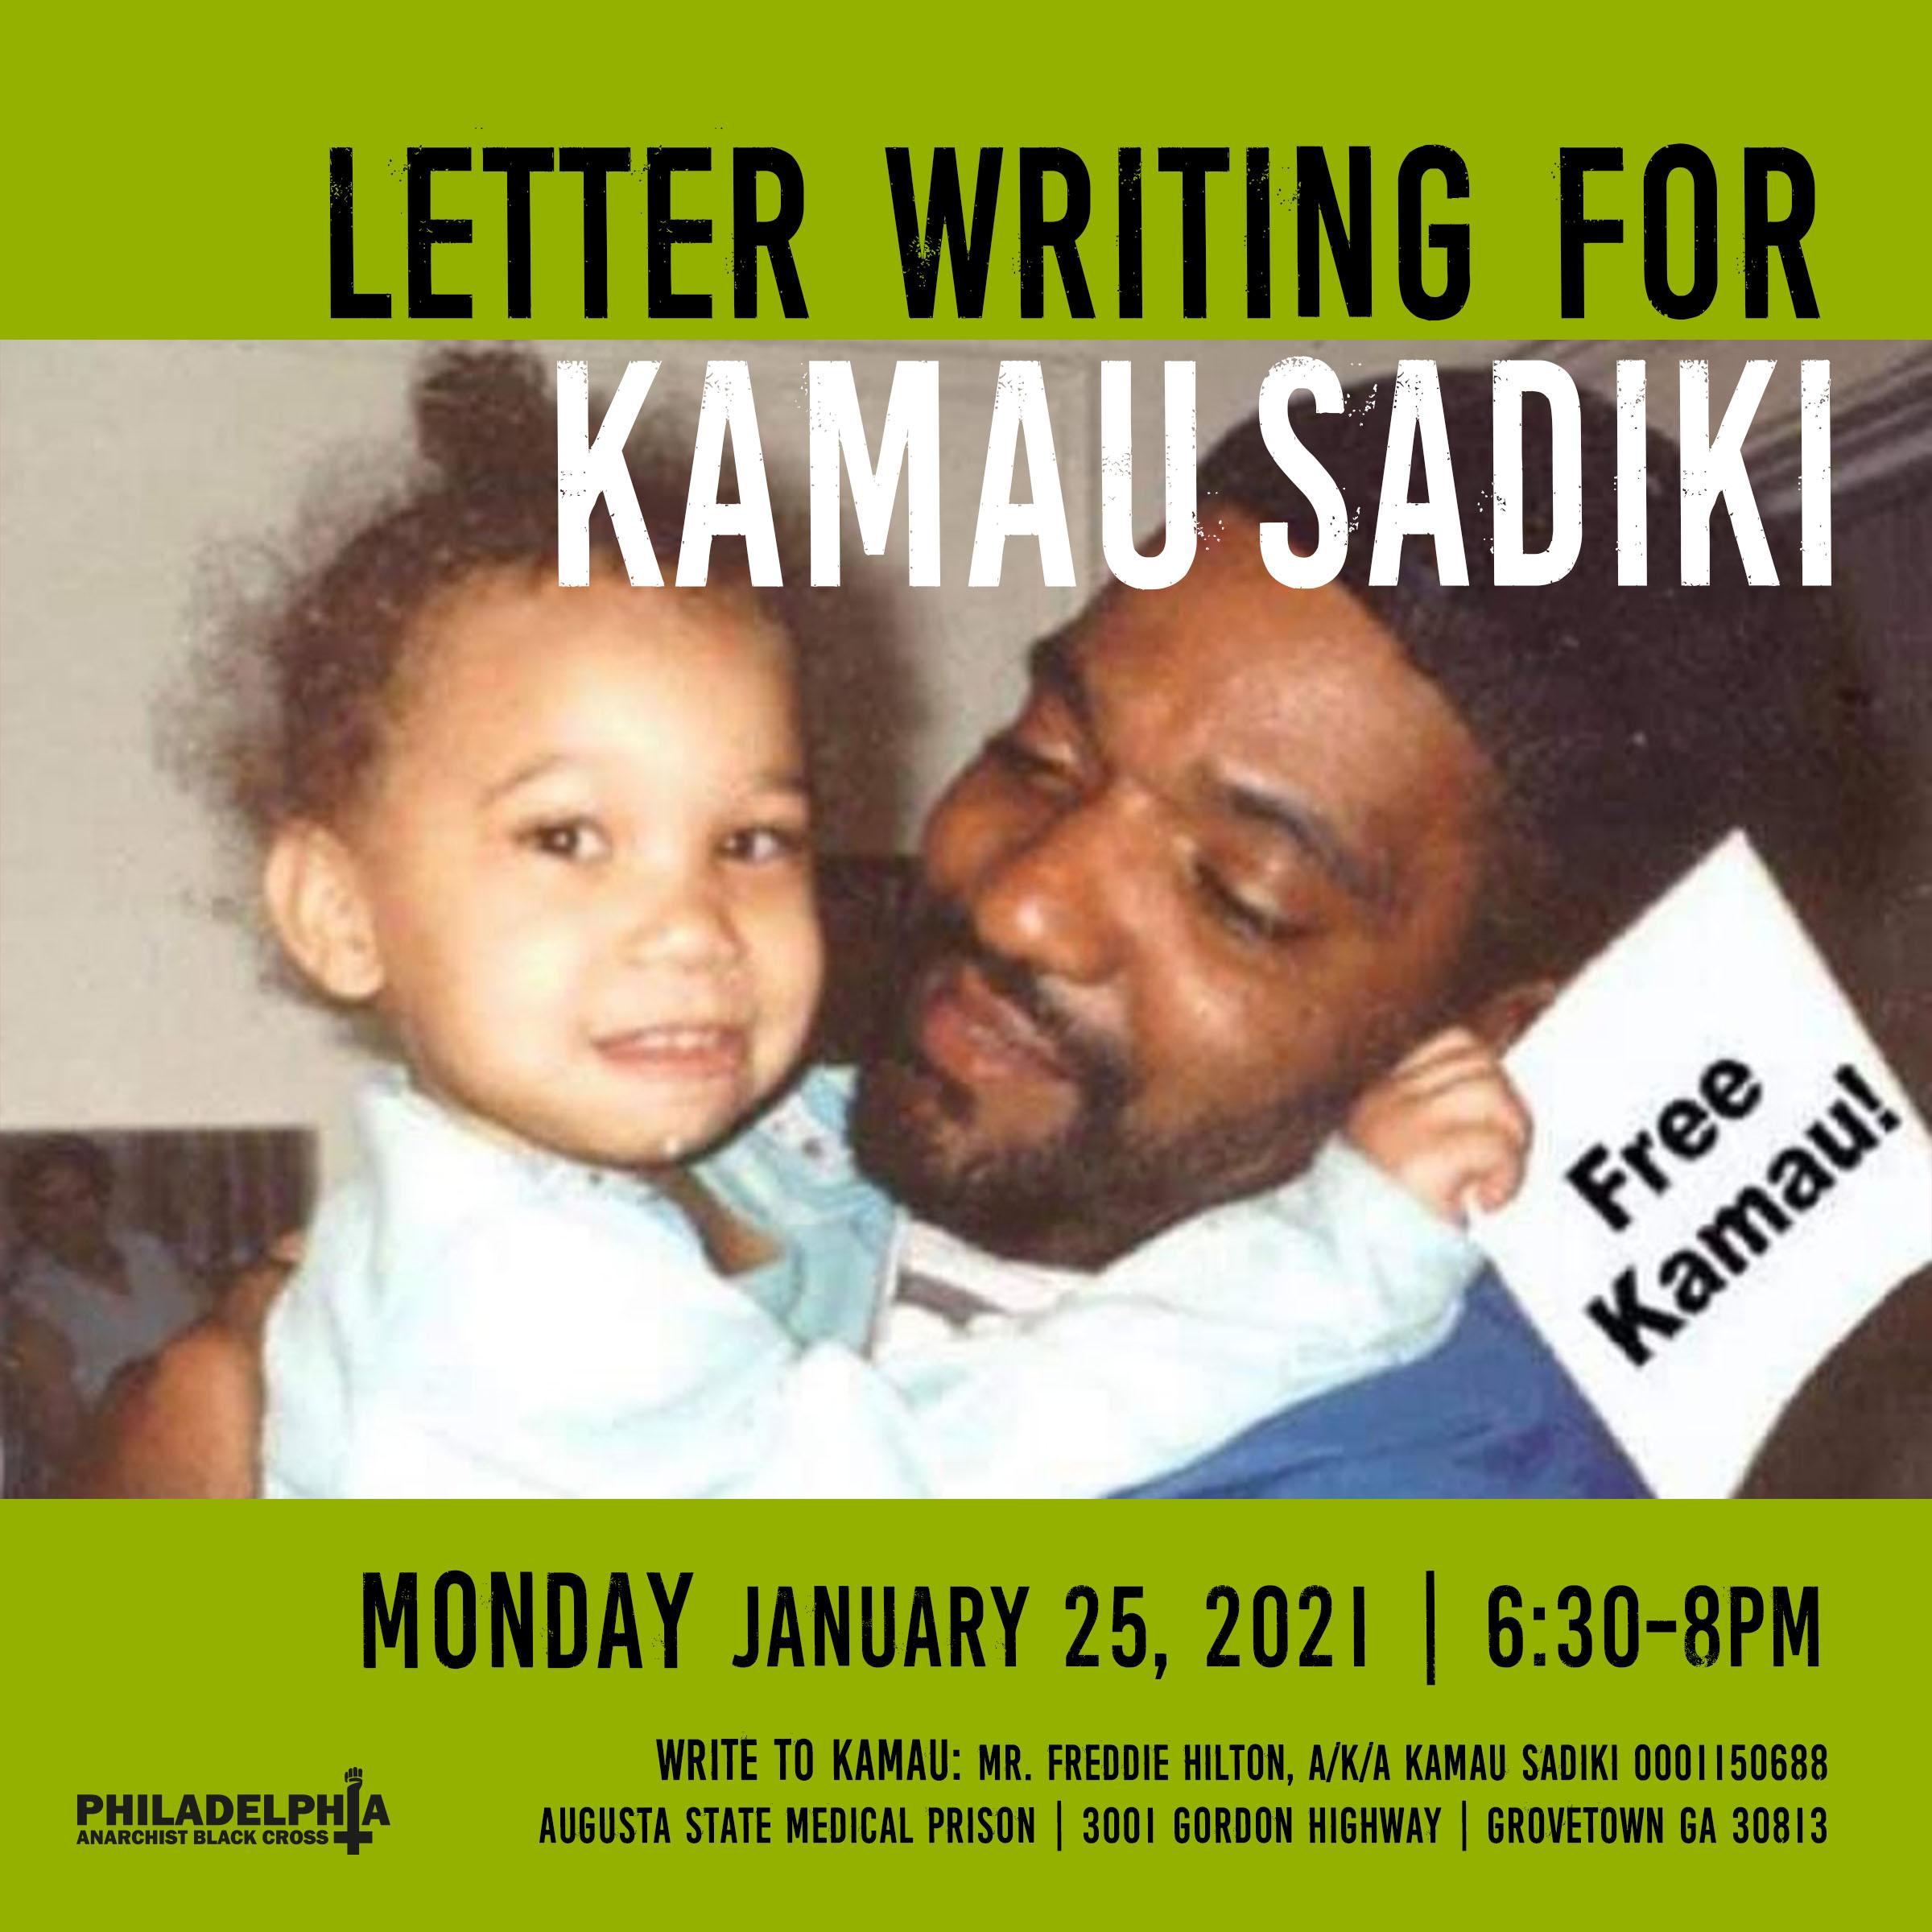 Monday January 25th: Letter-writing for Kamau Sadiki